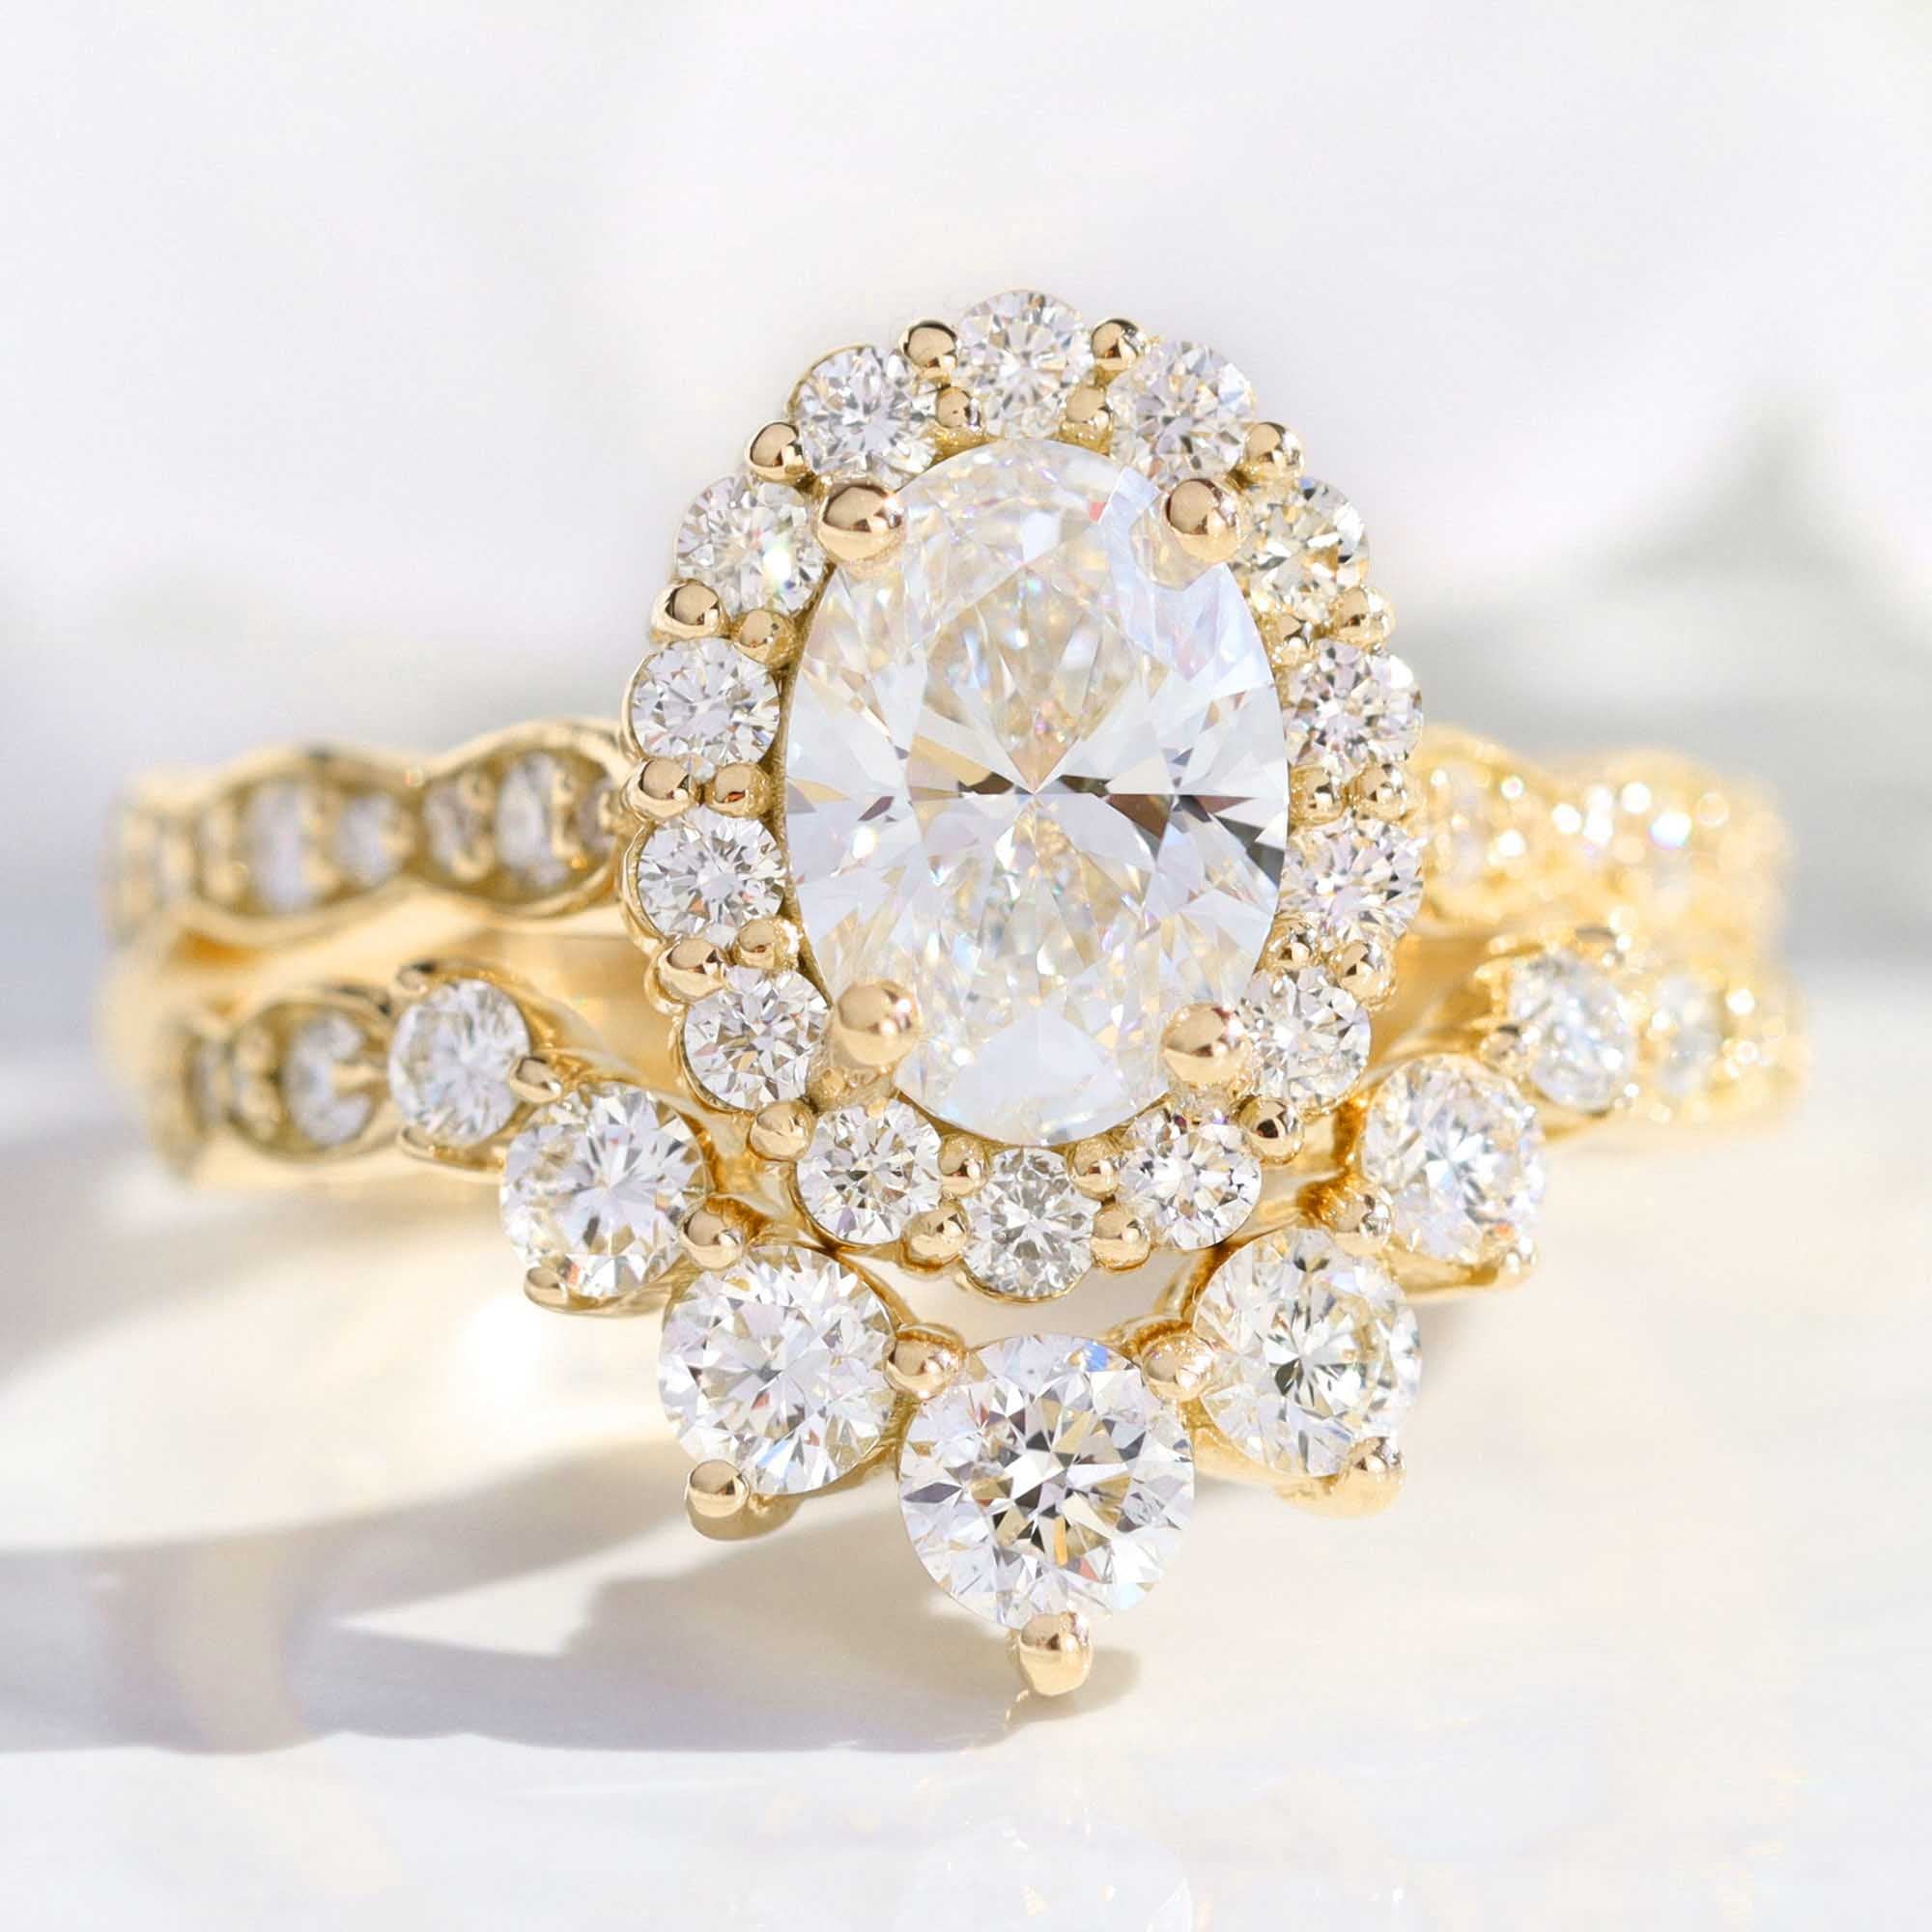 lab diamond ring stack yellow gold halo diamond engagement ring set La More Design Jewelry